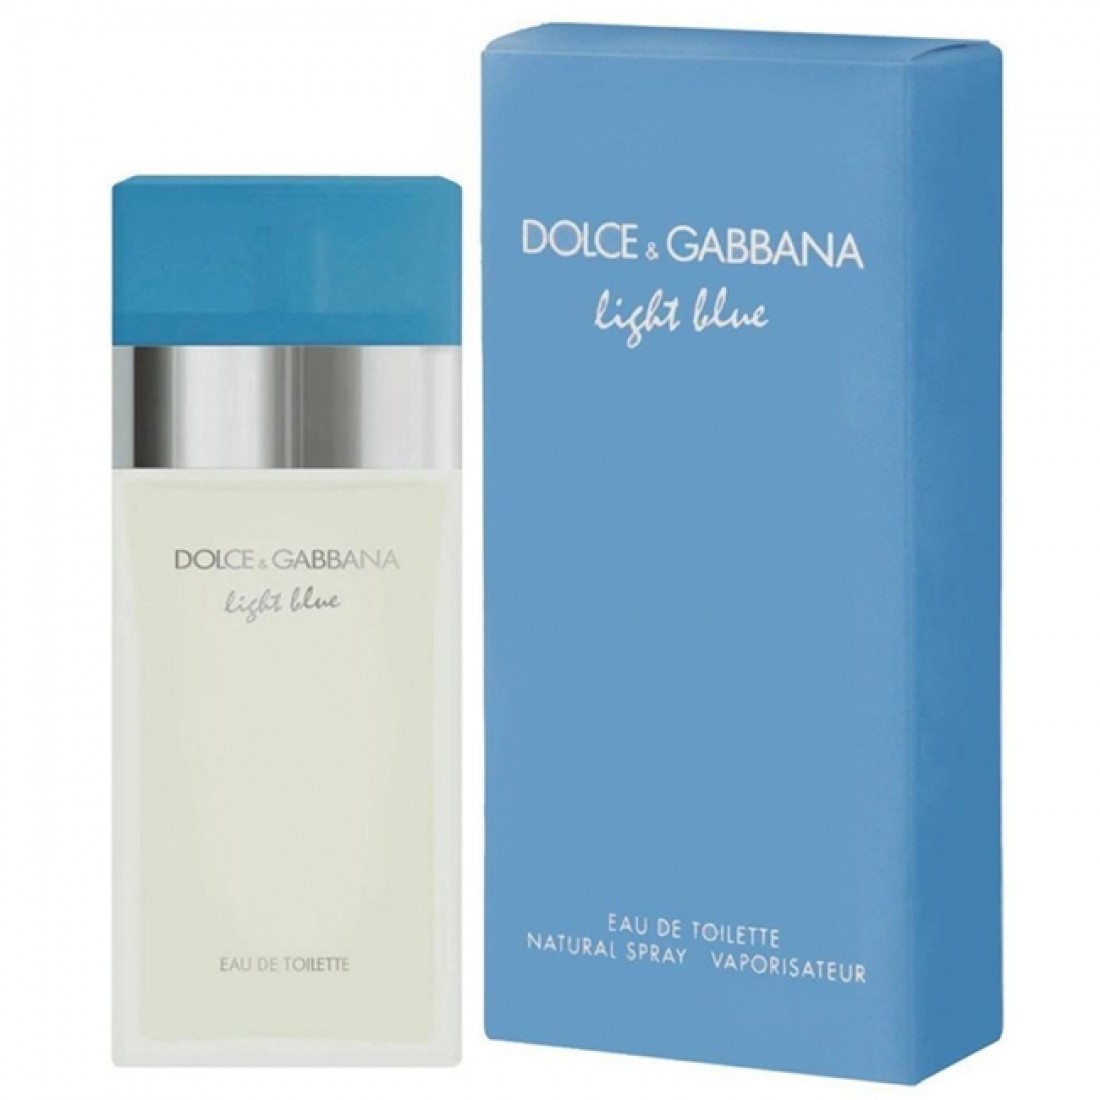 Dolce gabbana dolce blue jasmine. Dolce & Gabbana Light Blue 50 мл. Дольче Габбана Лайт Блю женские. Дольче Габбана 50мл 100мл. Dolce Gabbana Light Blue женские 50 мл.